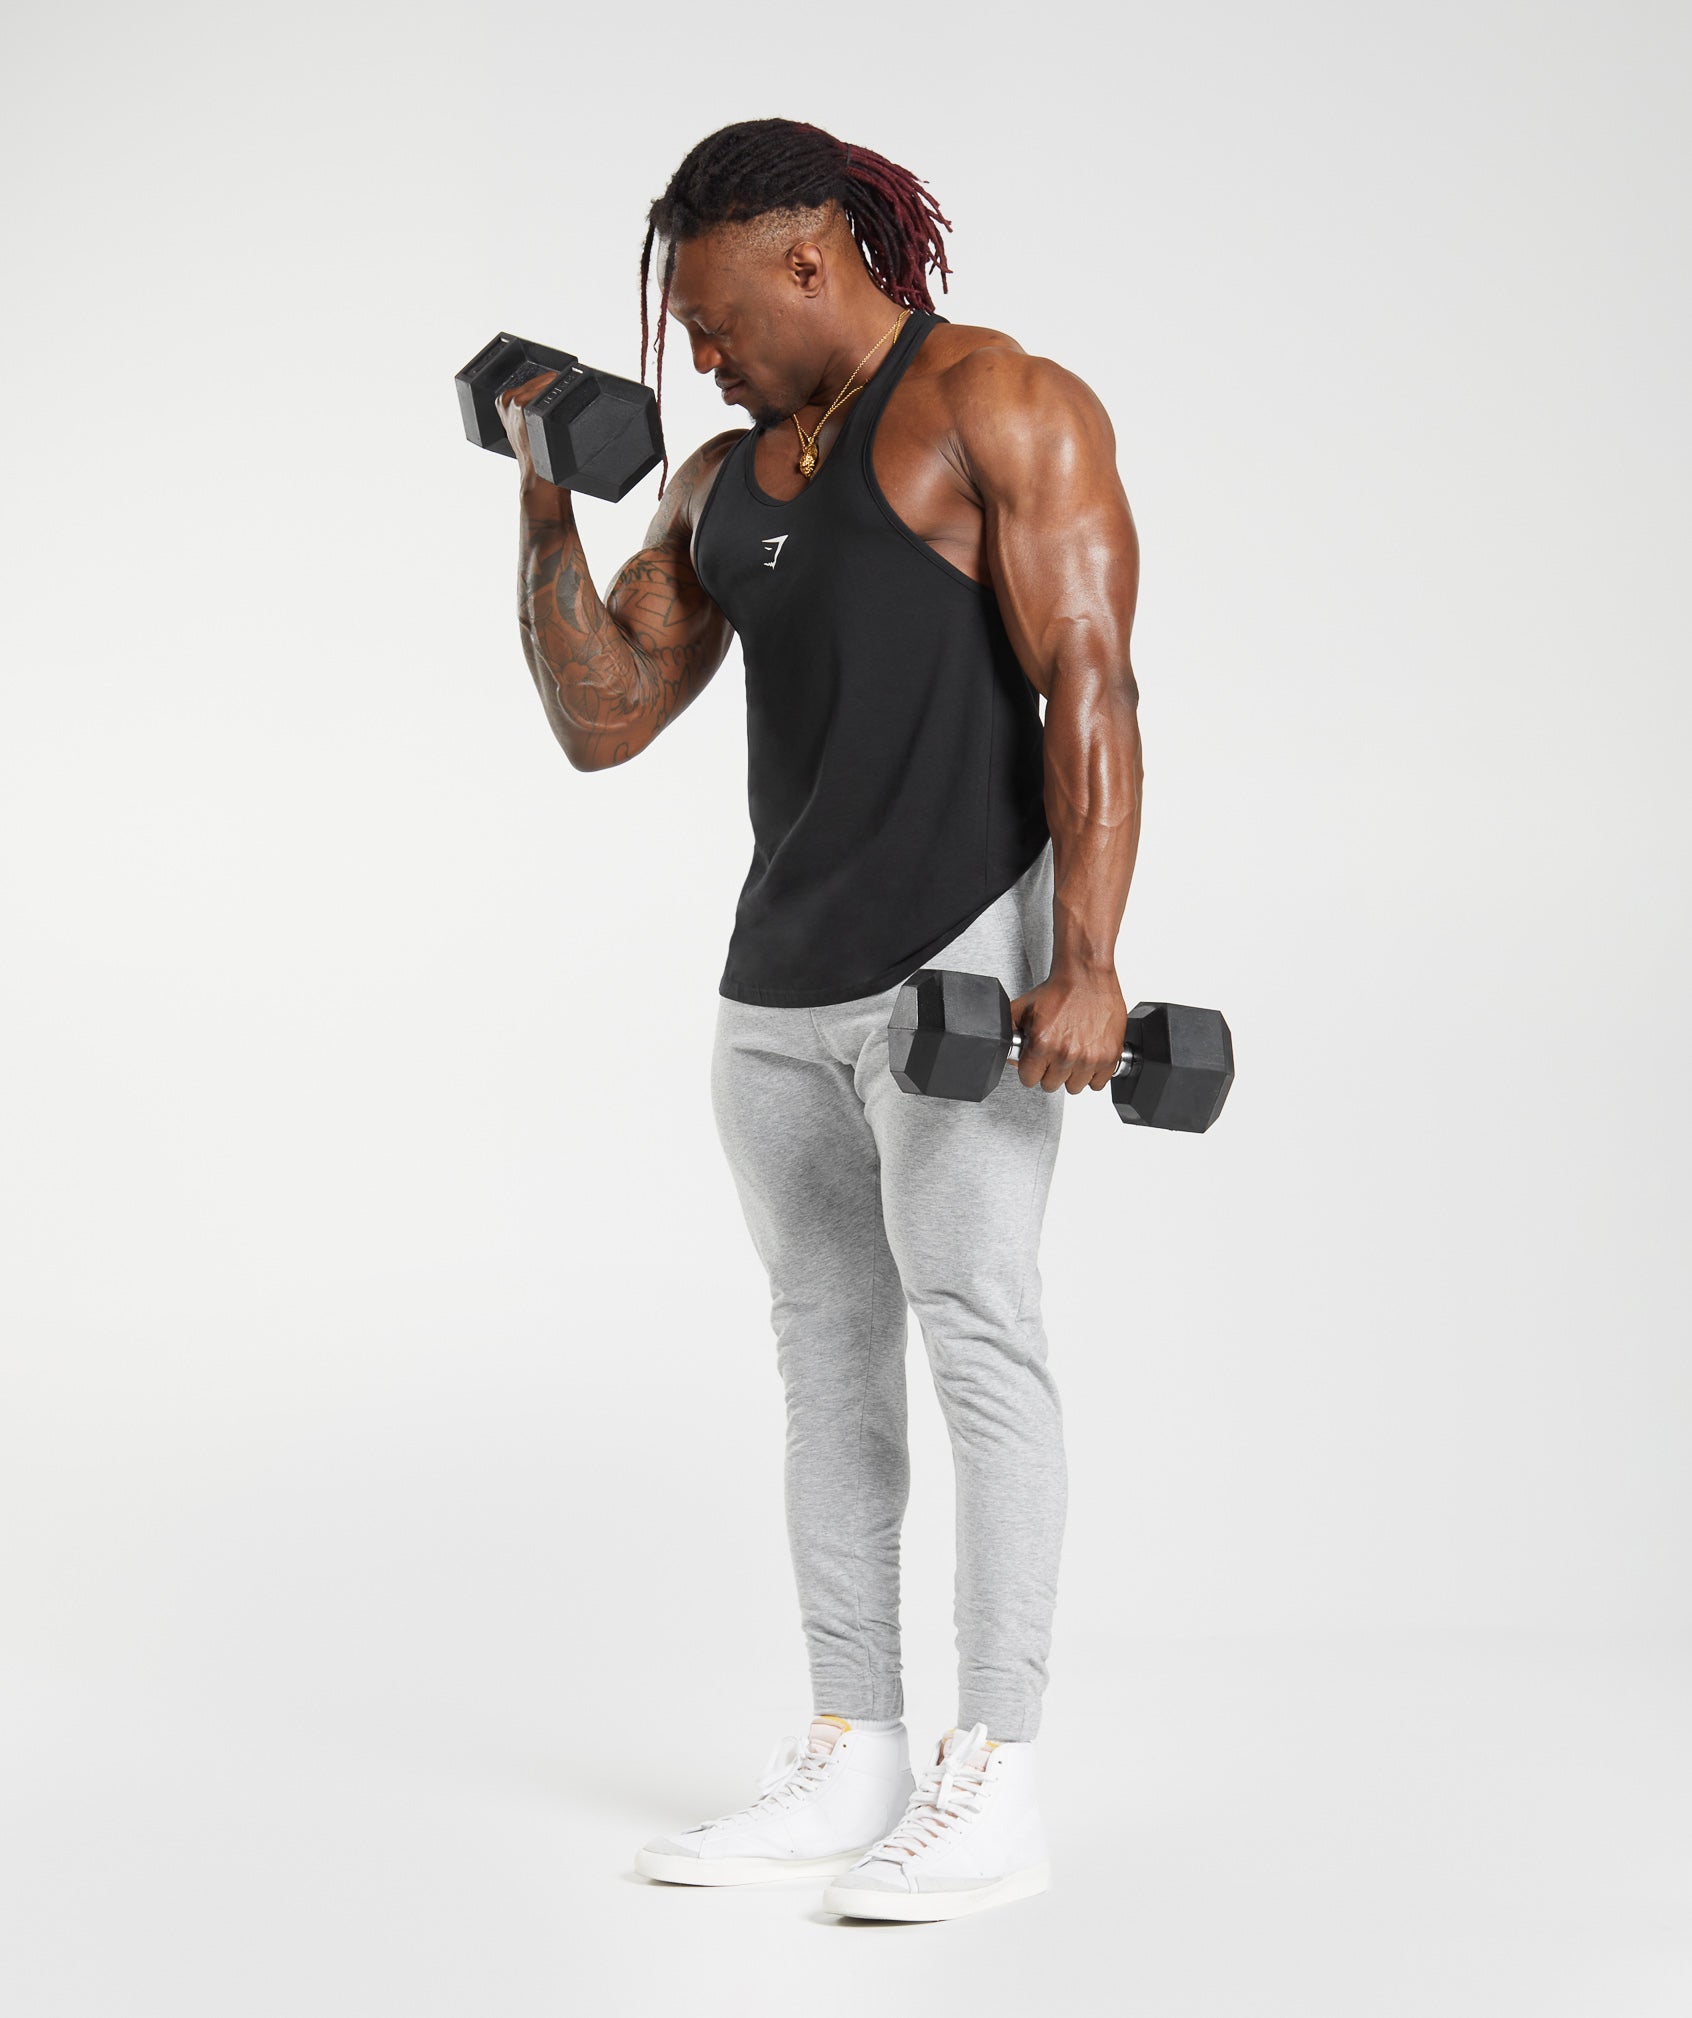 Critical Collection, Men's Workout & Gym Wear